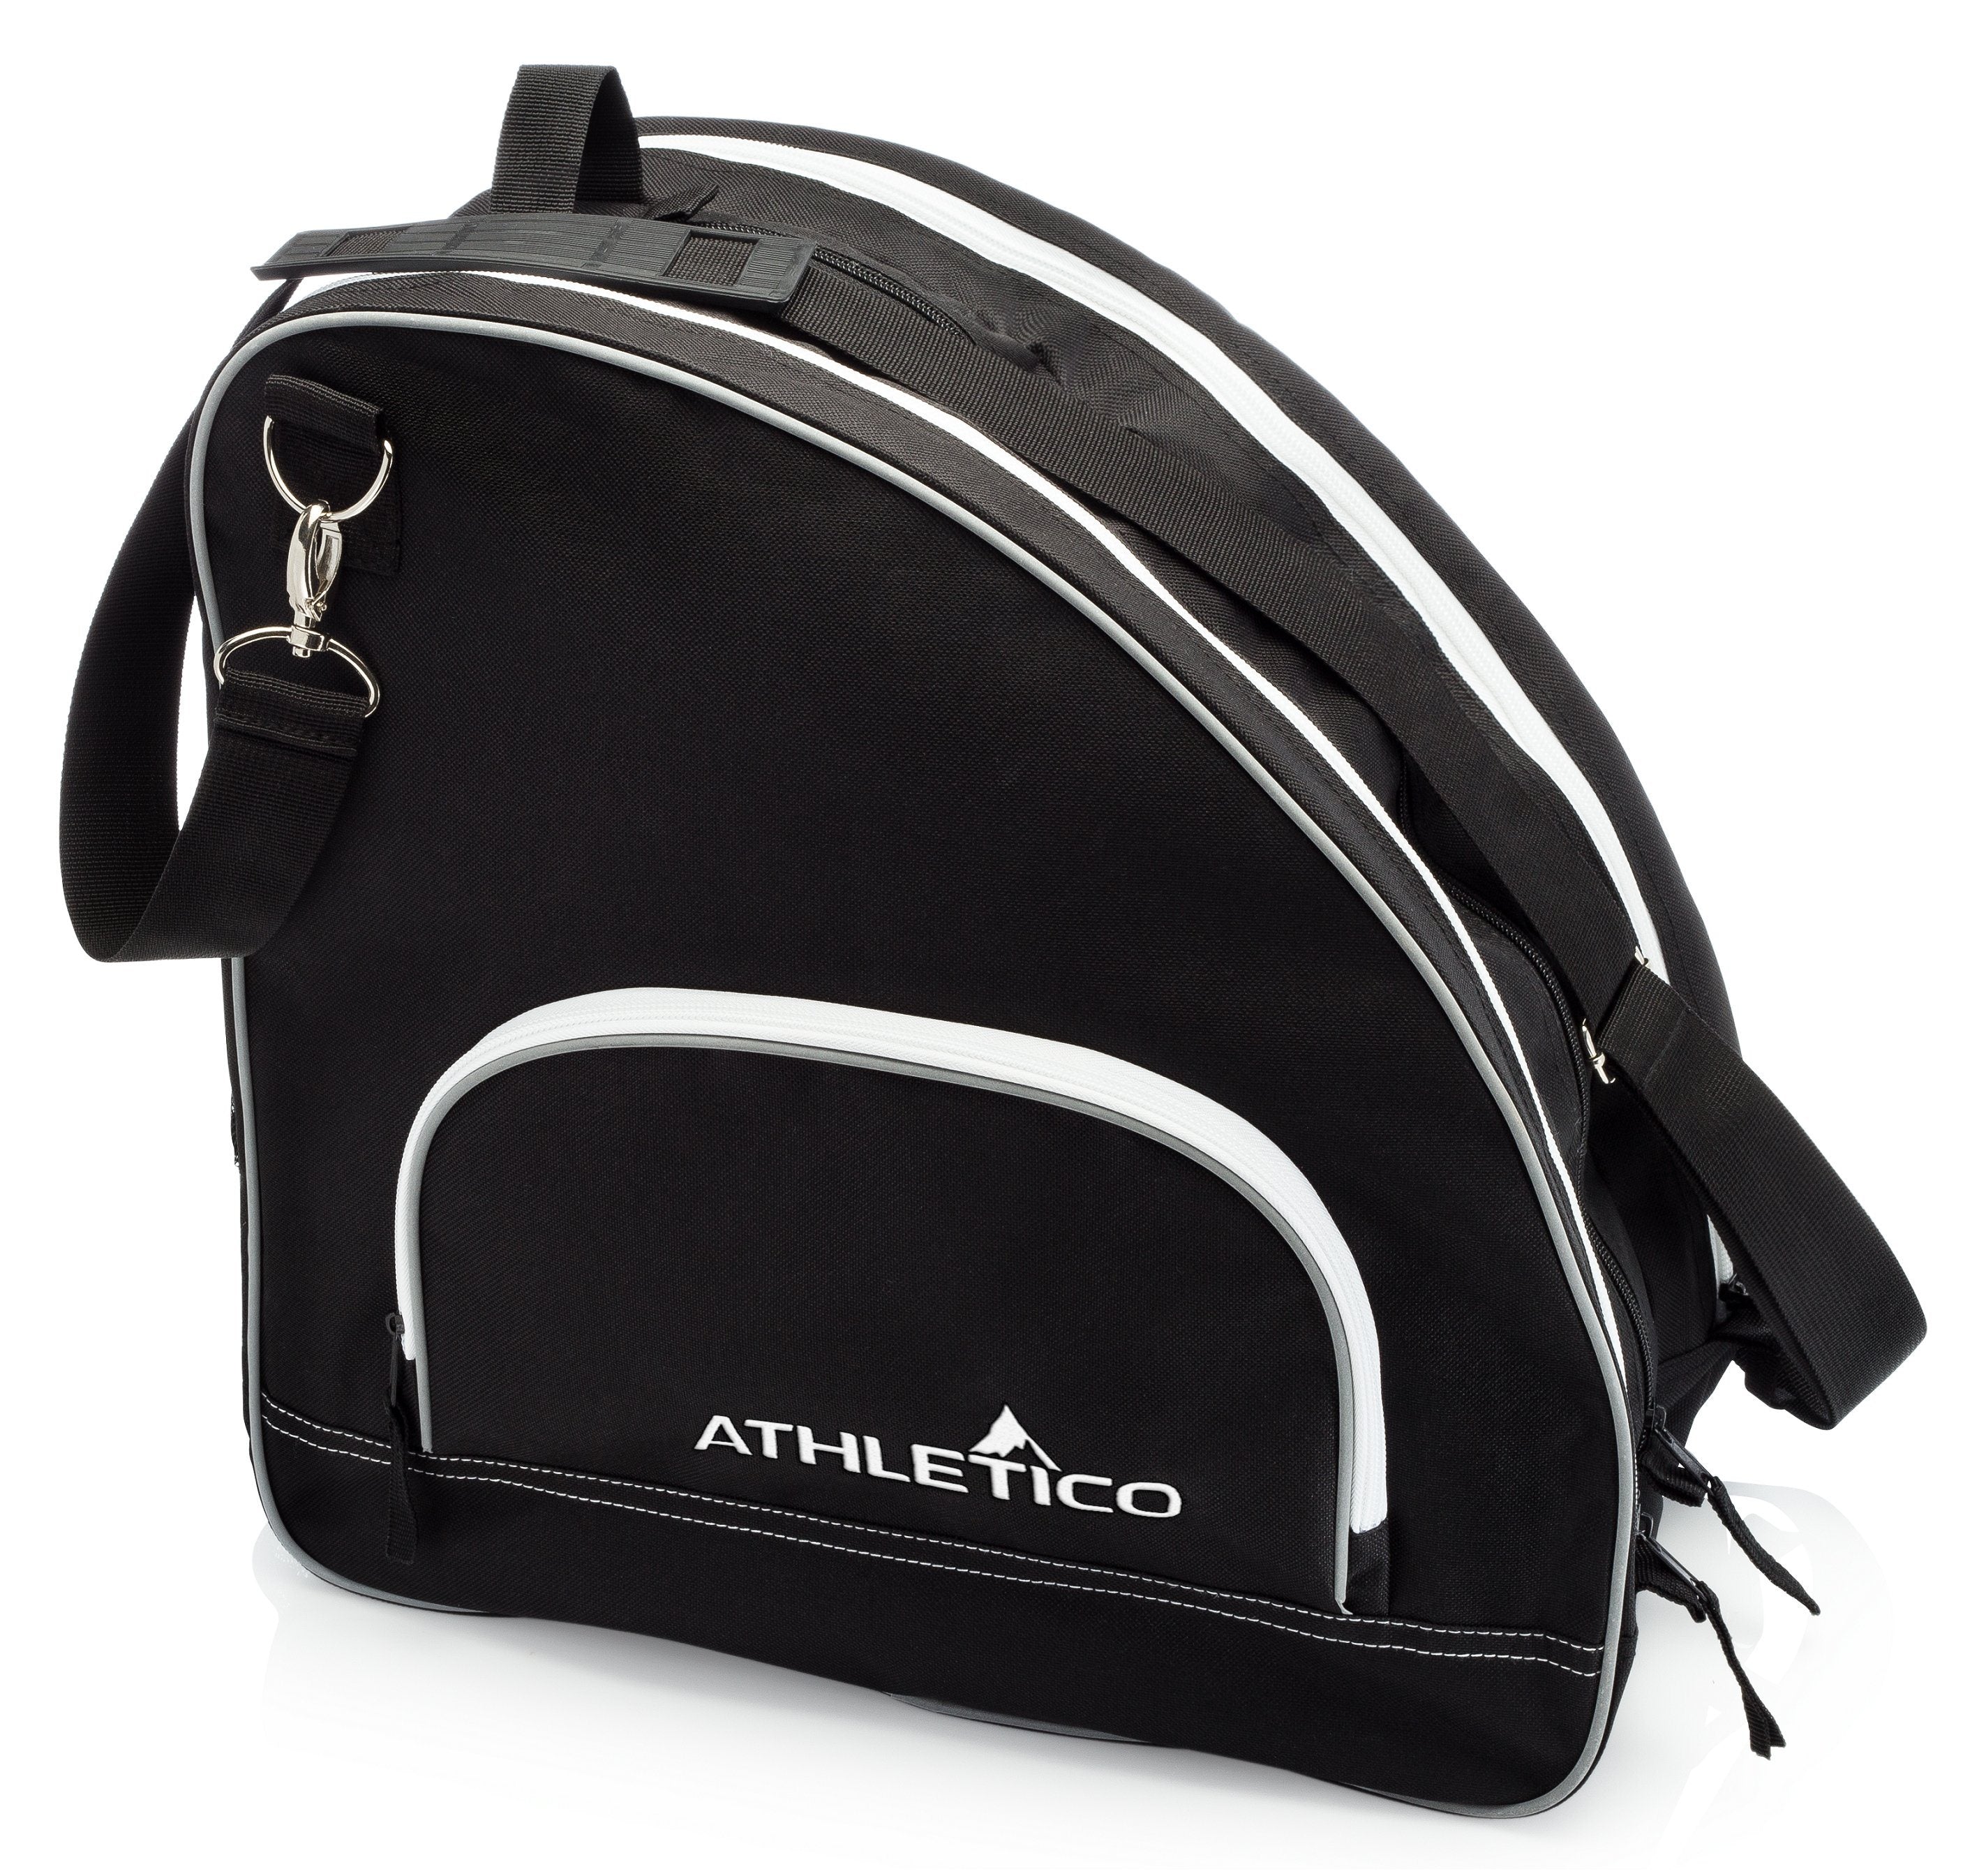 Athletico Ice & Inline Skate Bag - Premium Bag to Carry Ice Skates, Roller Skate